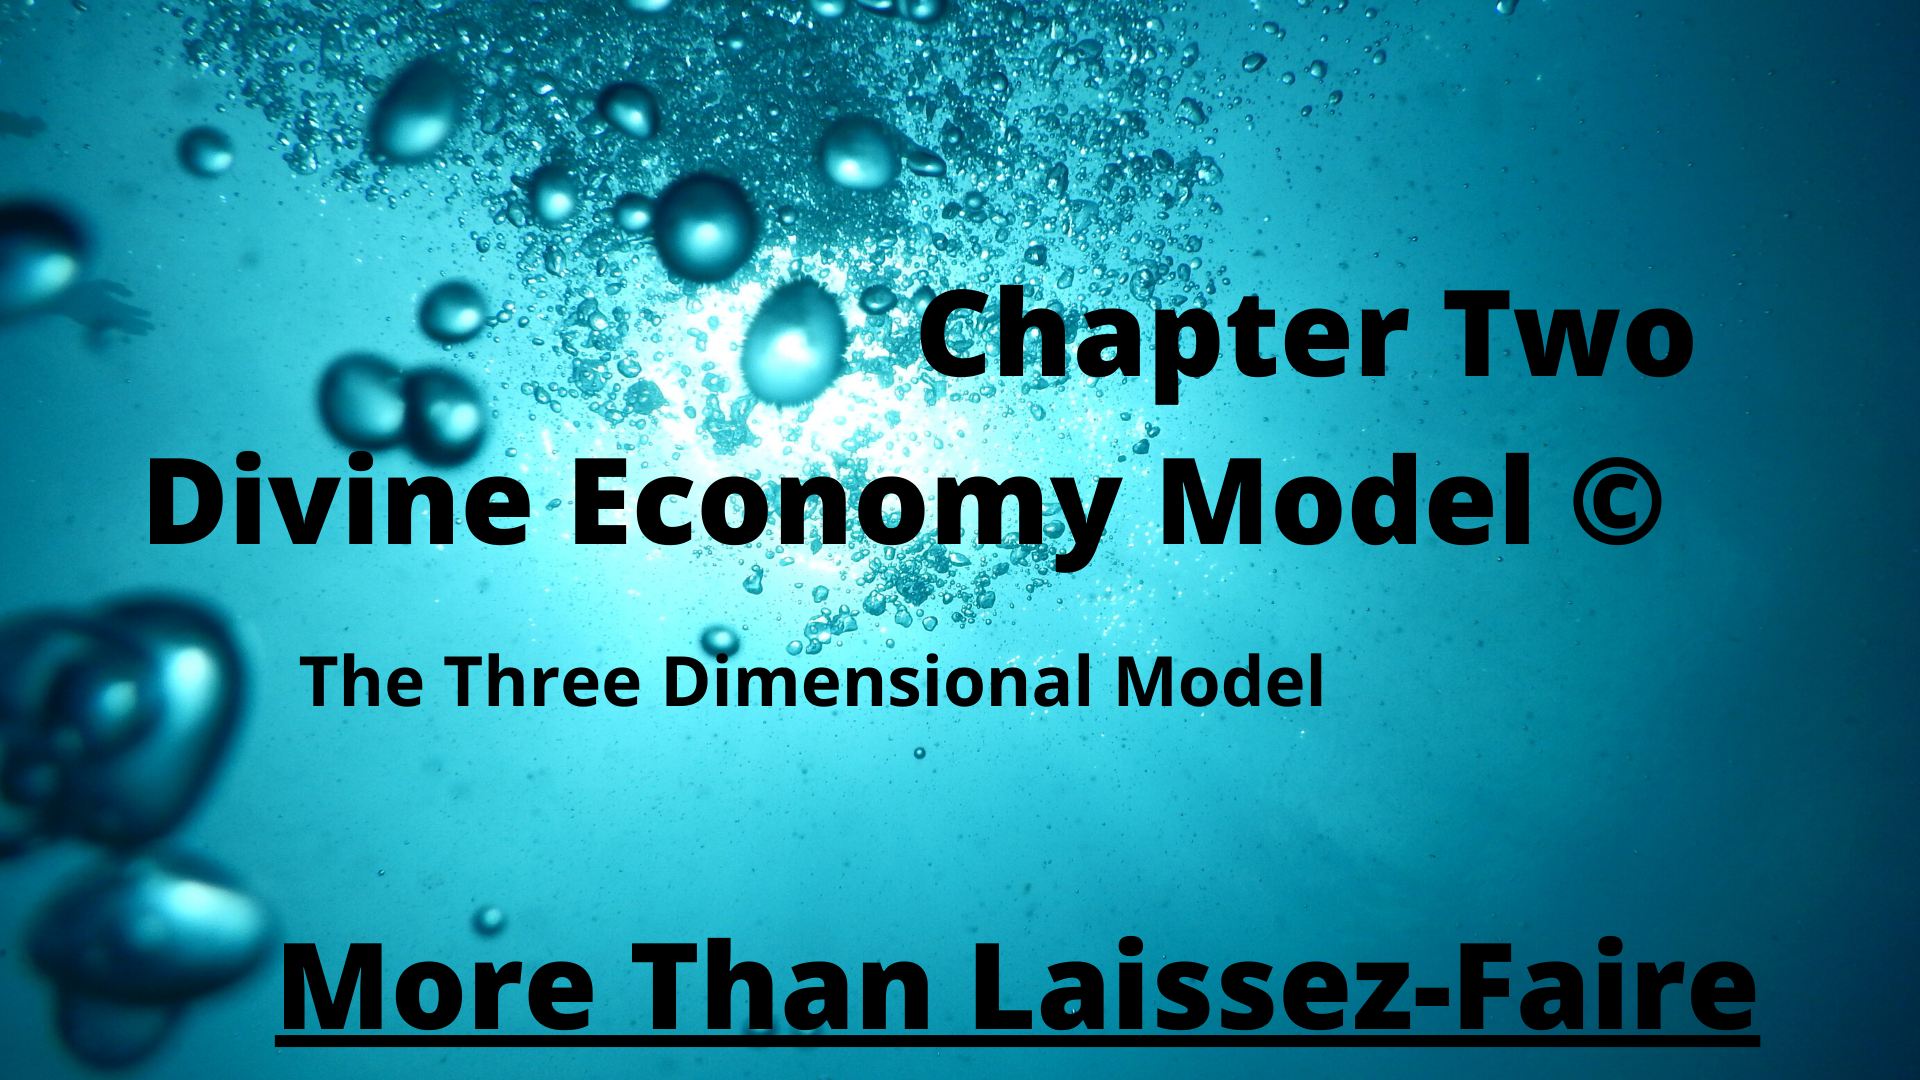 5-Dimensional Model, 5-Dimensional Human Action Economic Model